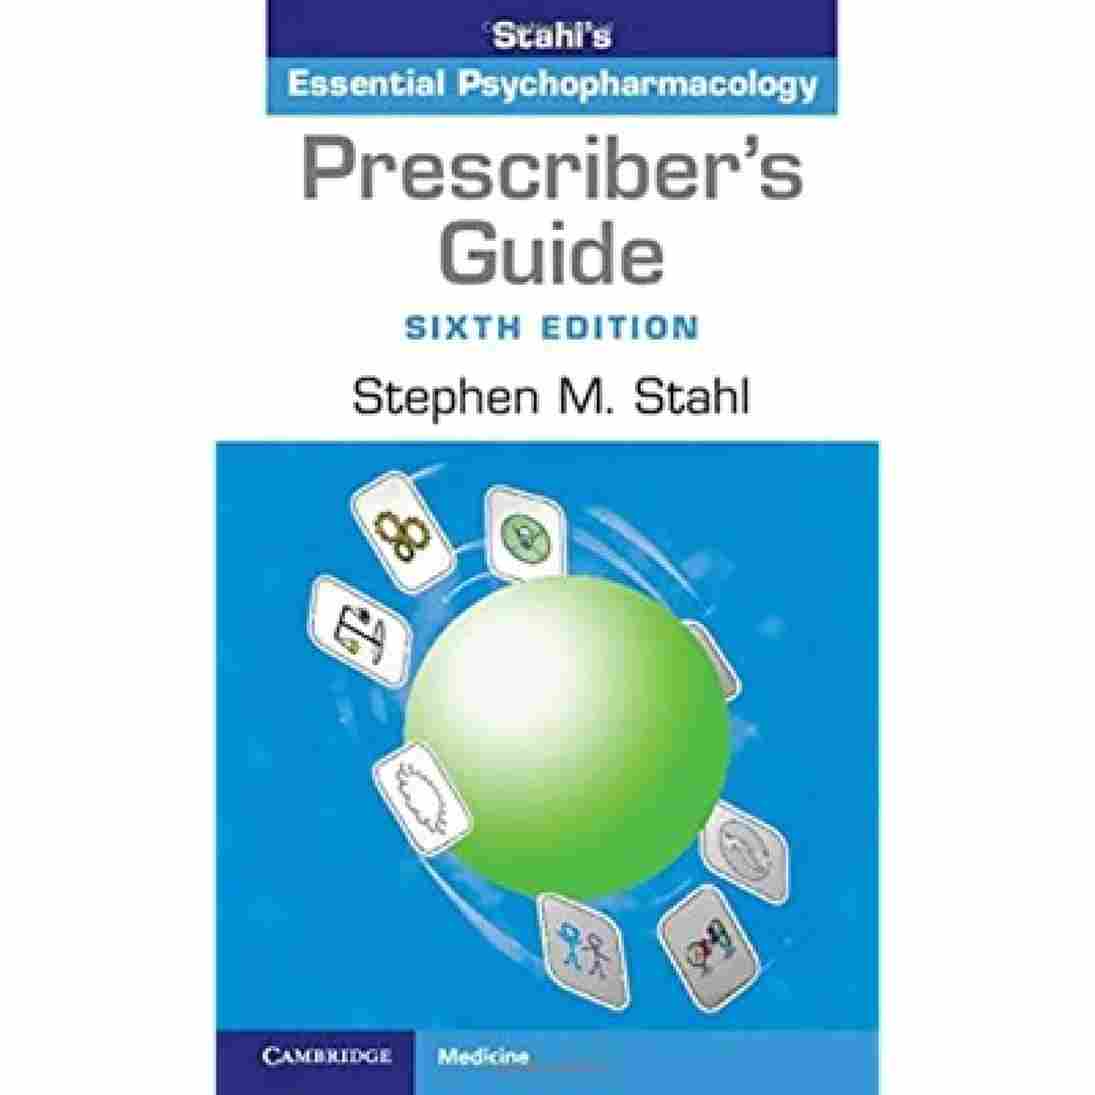 Prescriber's Guide - 6th Edition (Paperback) - Stephen M. Stahl